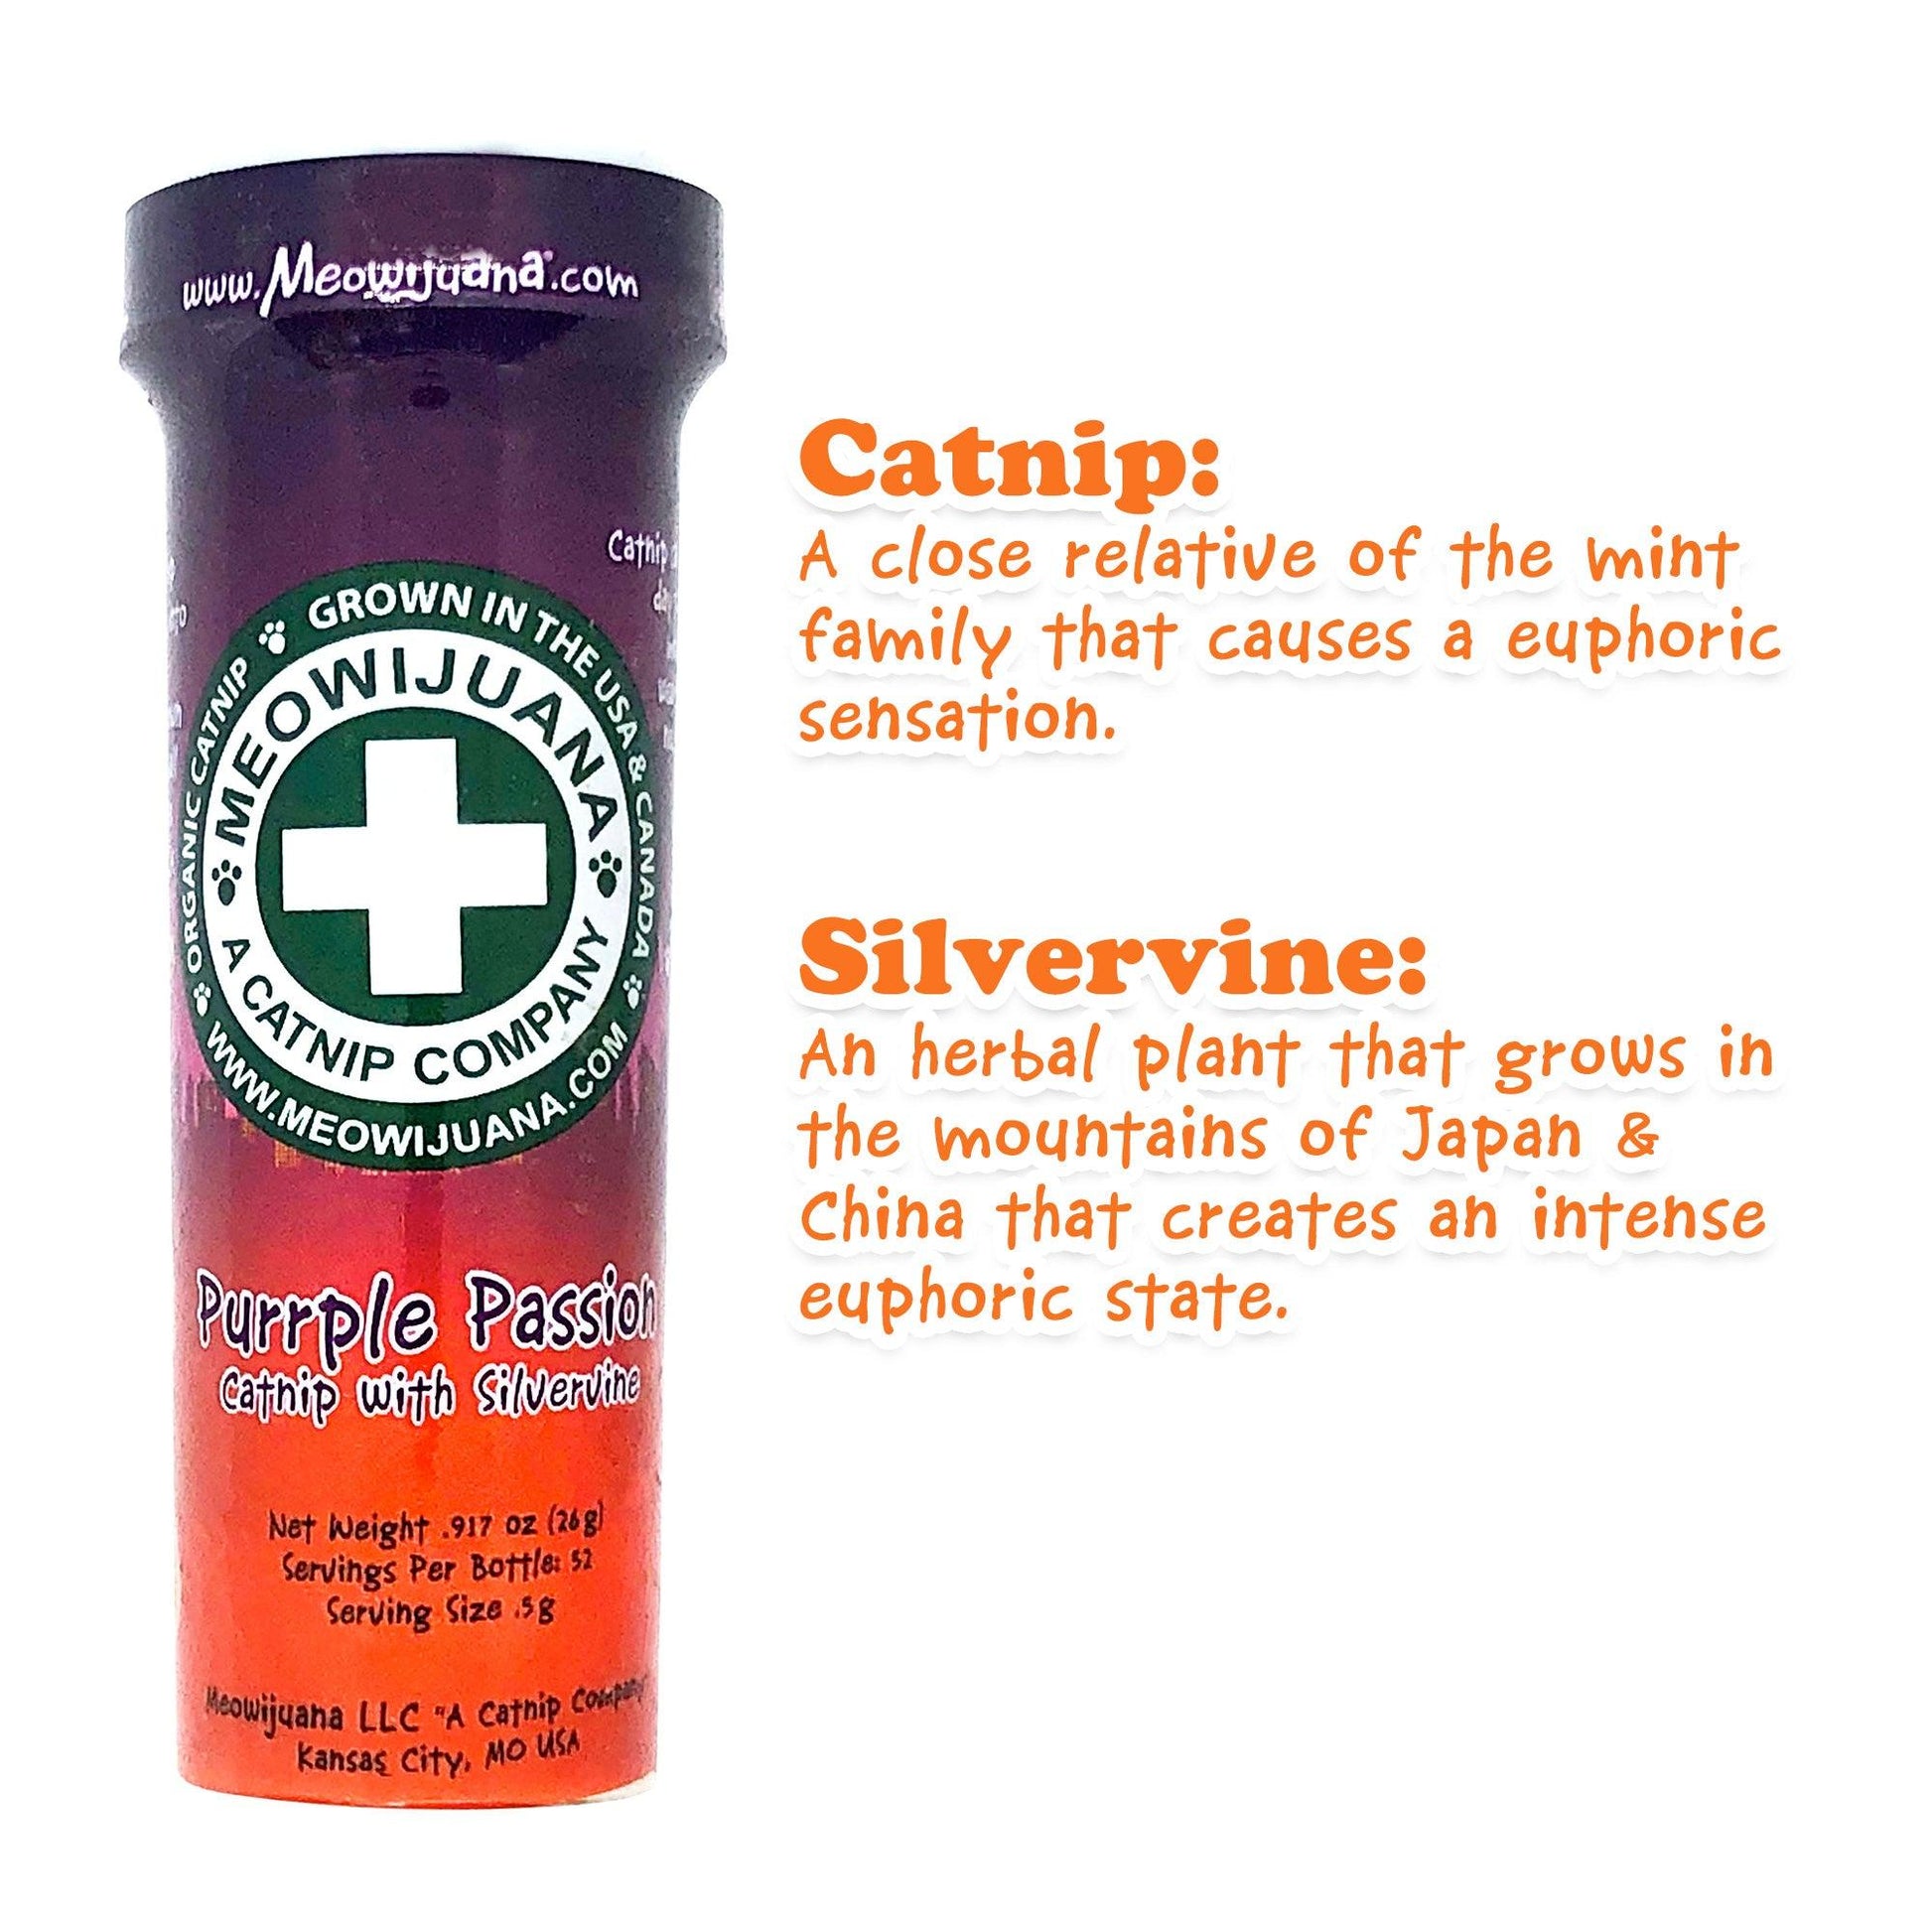 Purrple Passion - Silvervine & Catnip Blend - Meowijuana - A Catnip Company